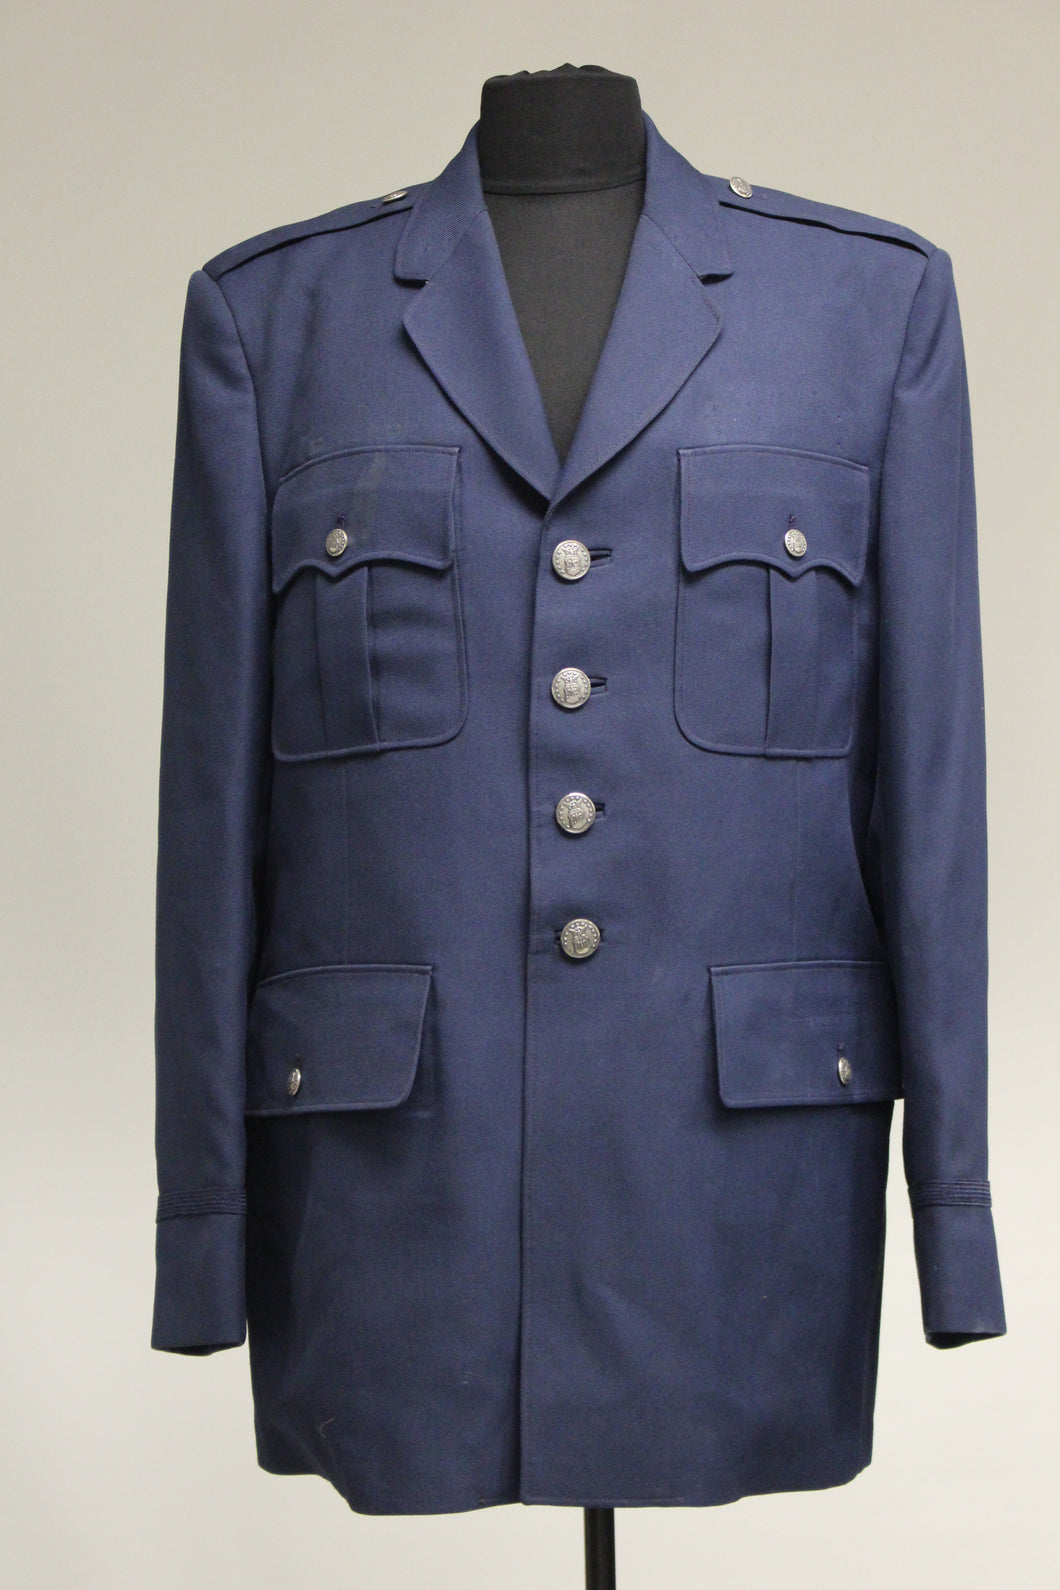 US AF Air Force Dress Coat with Shoulders - 8405-01-086-3855 - 36R - Used